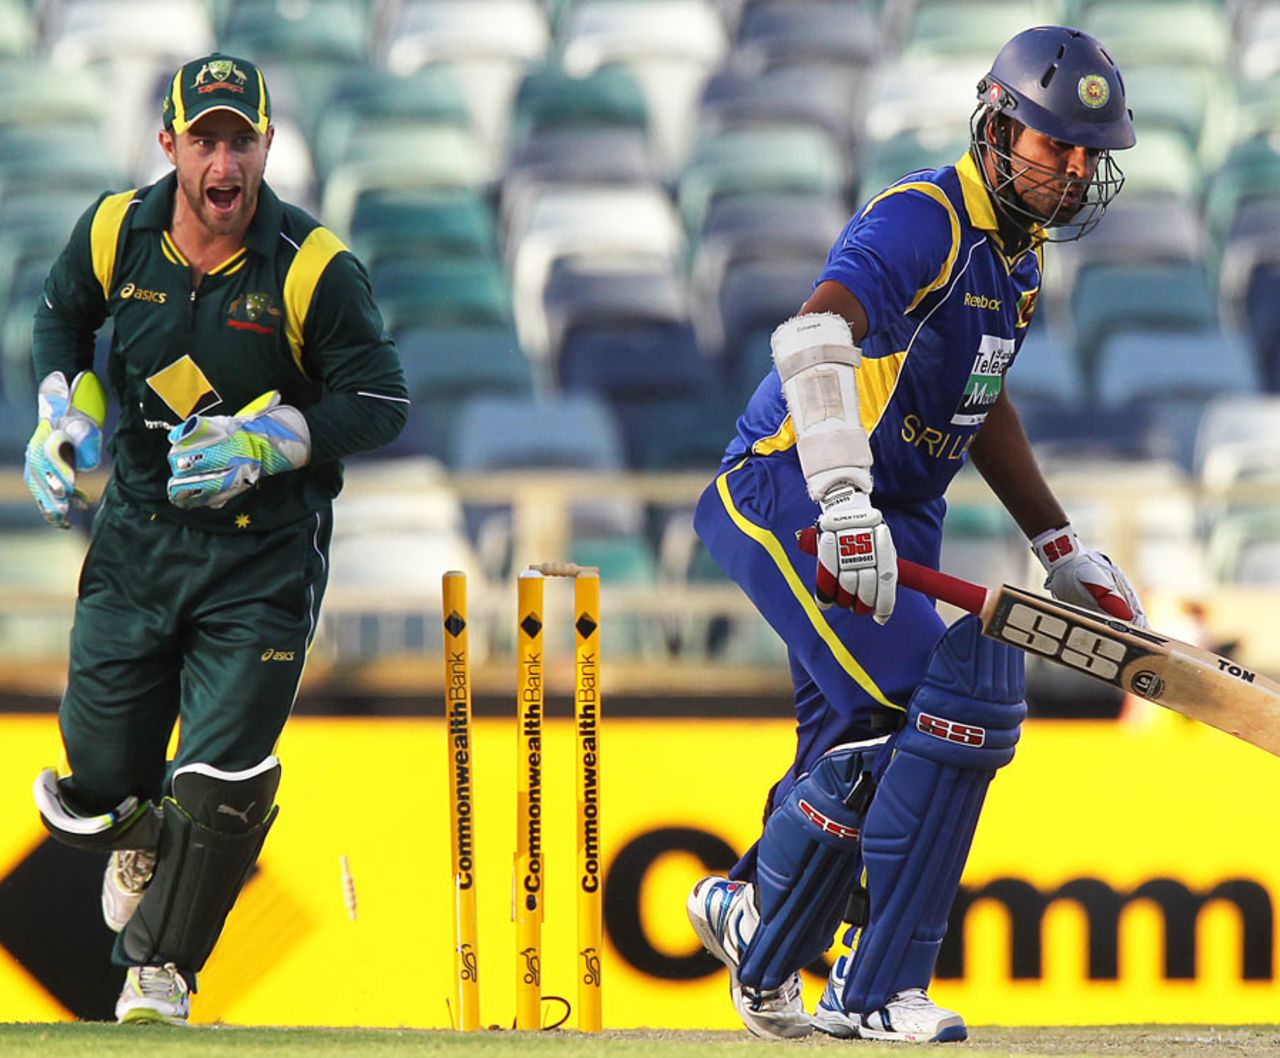 Lahiru Thirimanne was bowled on 3, Australia v Sri Lanka, Commonwealth Bank Series, Perth, February 10, 2012